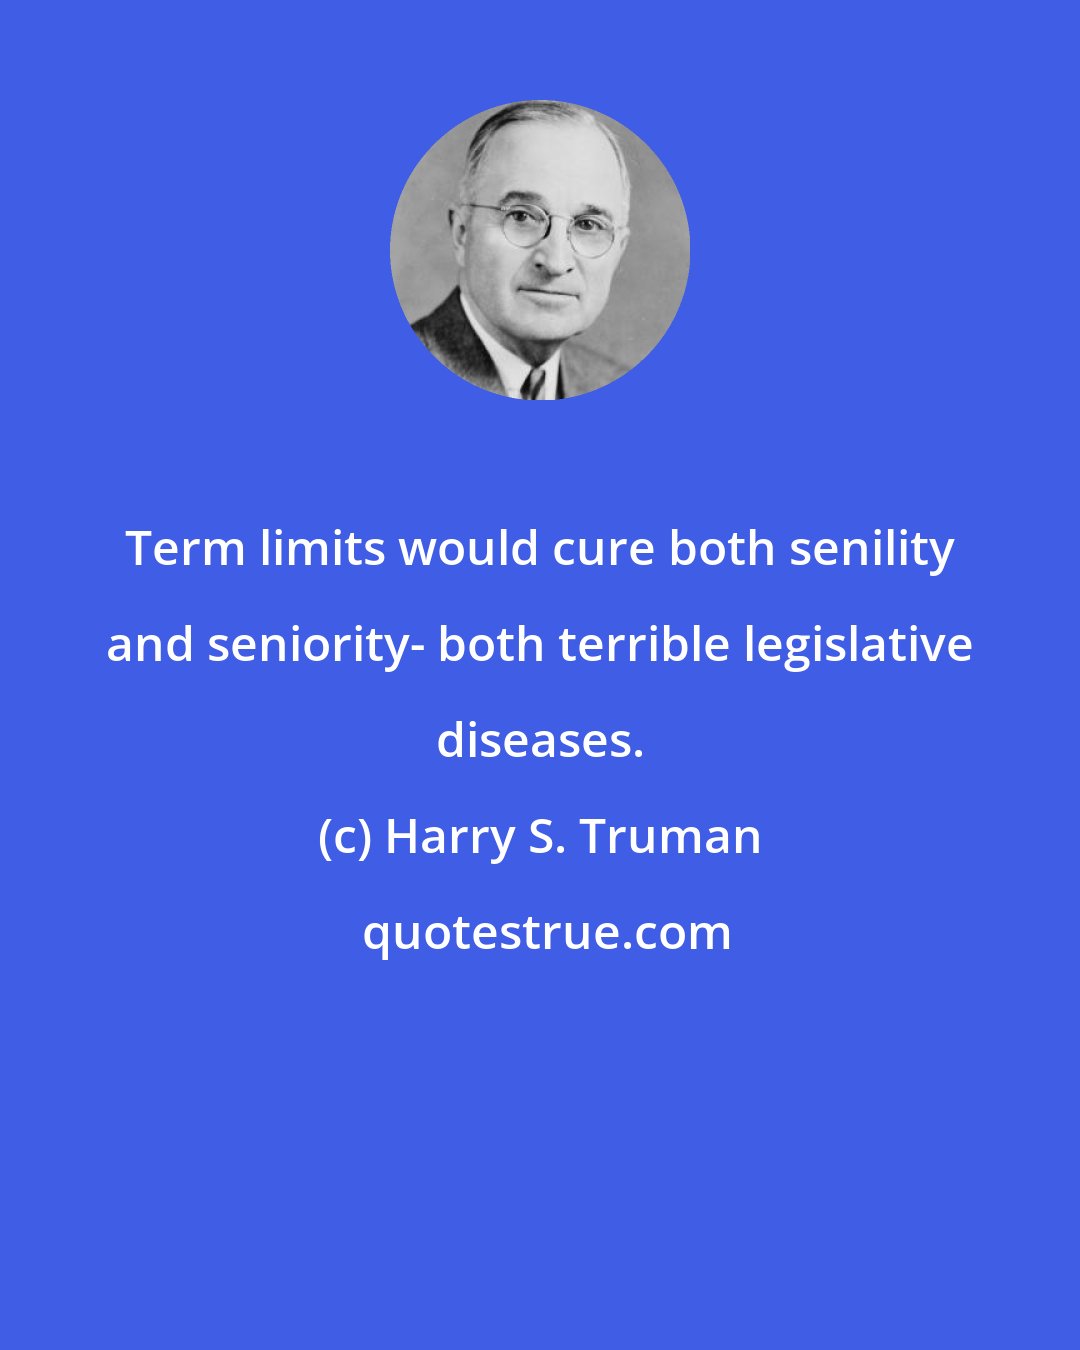 Harry S. Truman: Term limits would cure both senility and seniority- both terrible legislative diseases.